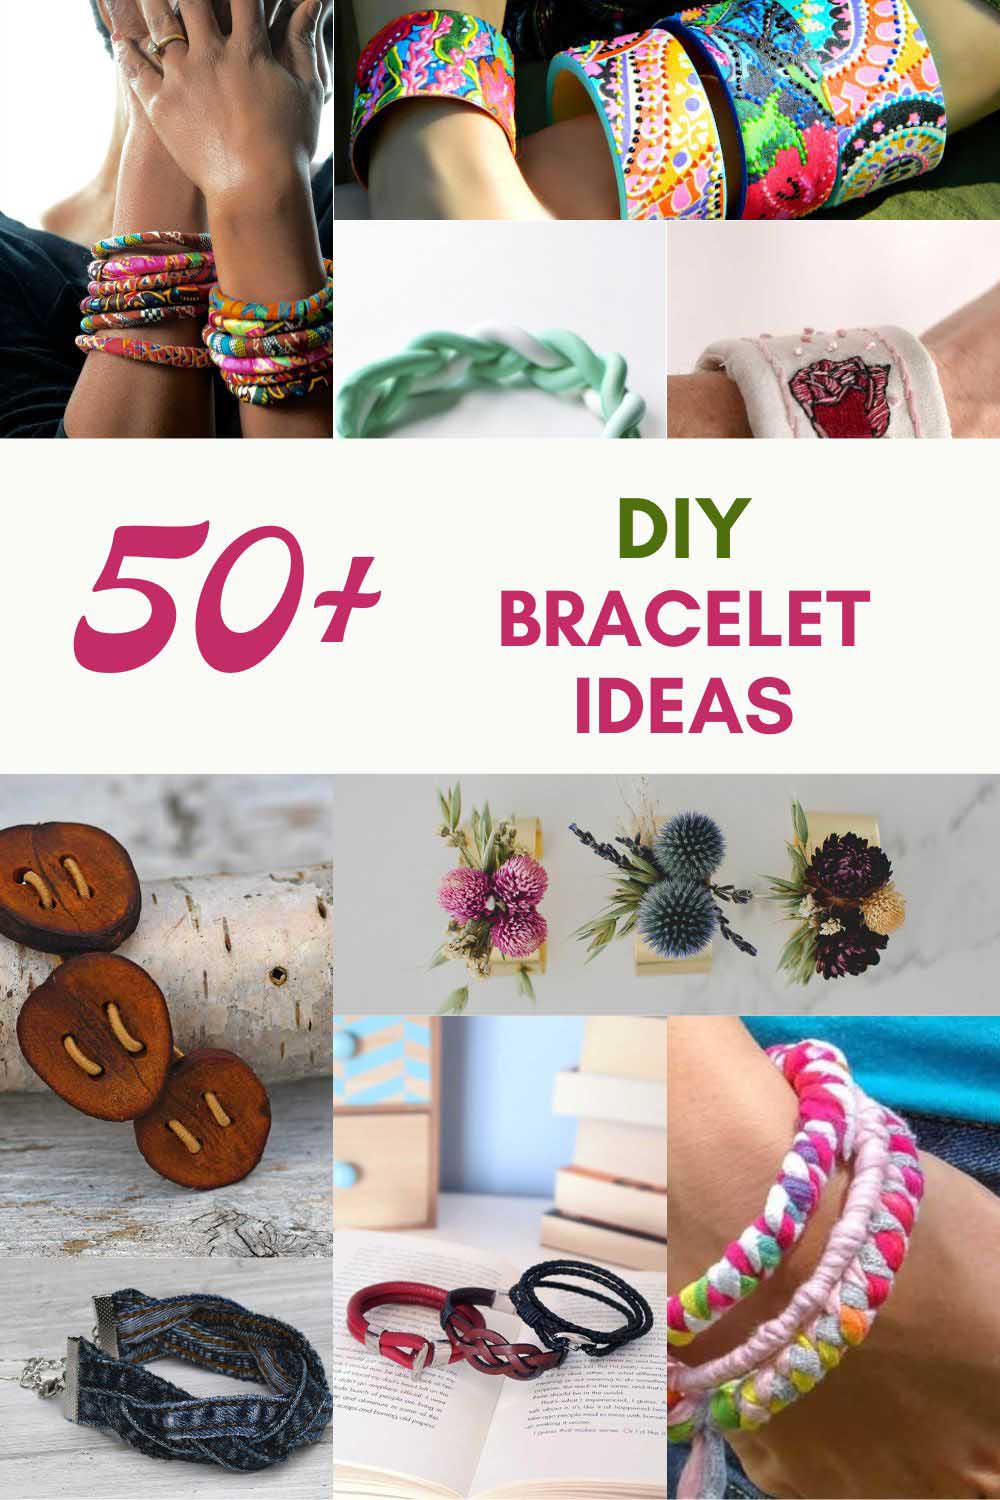 51 diy bracelet ideas Pin 1